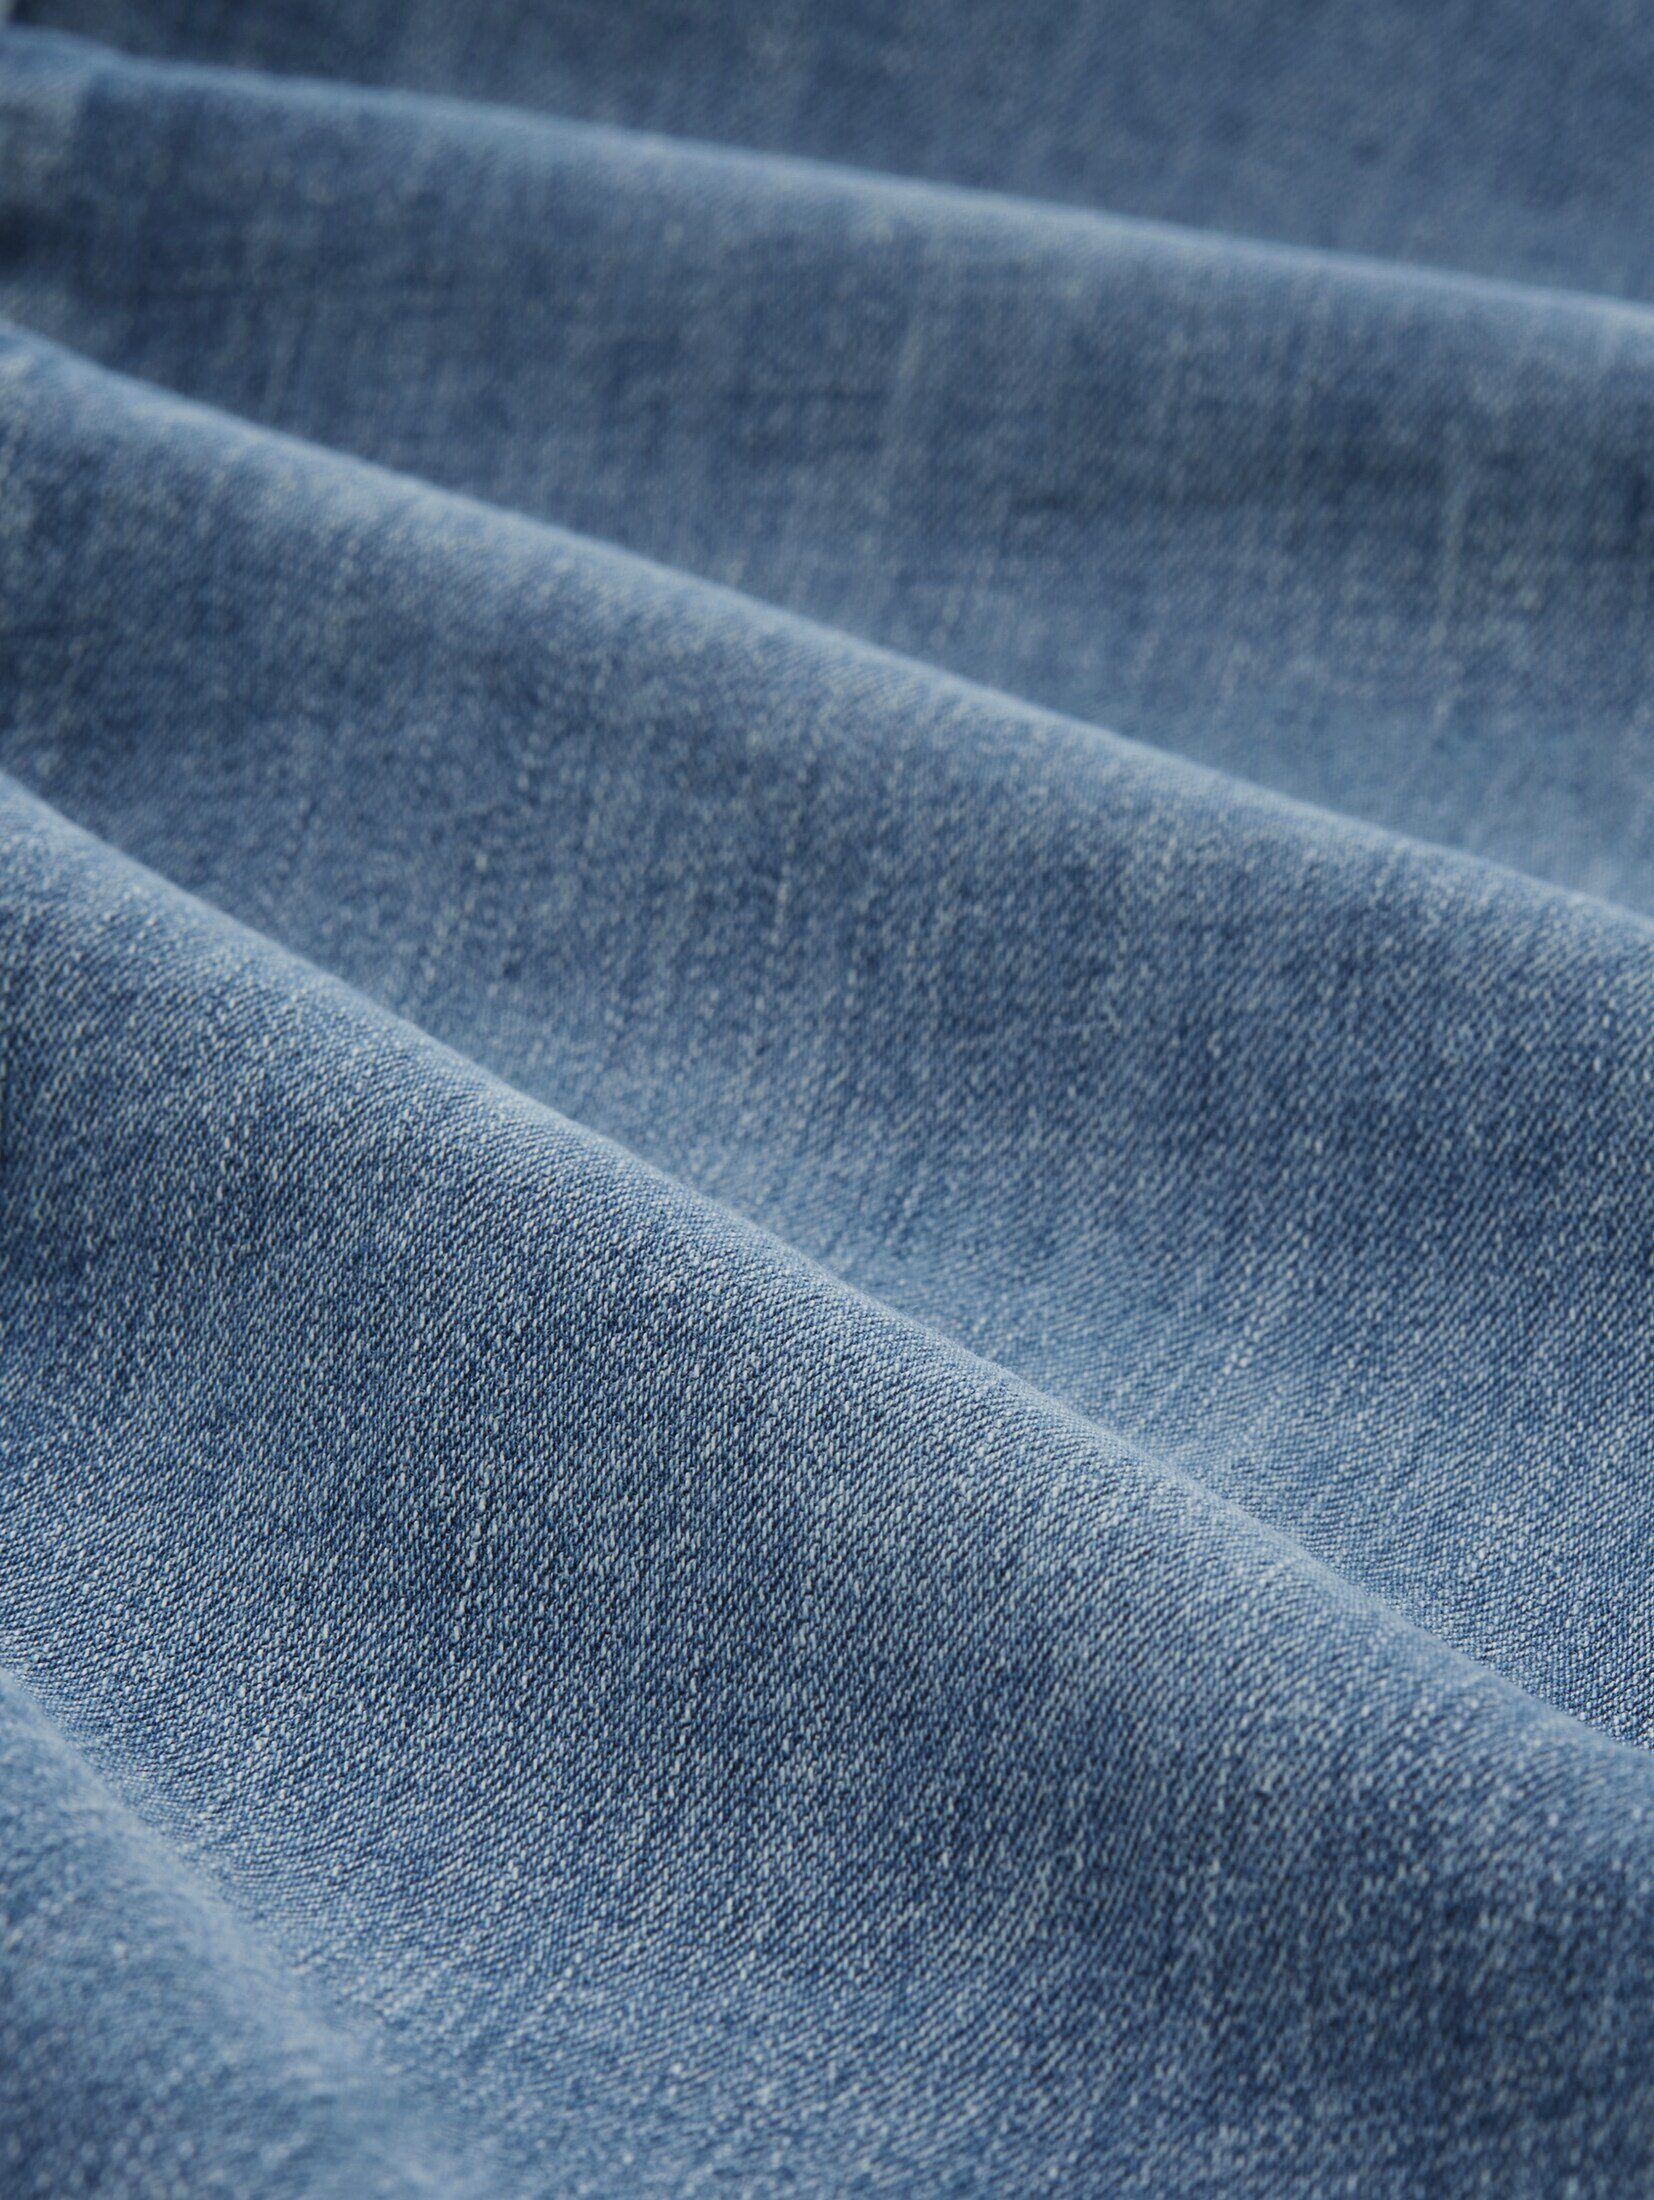 Straight-Jeans mit TAILOR Blue Josh ® Light Used Regular Slim Jeans Stone LYCRA TOM Denim